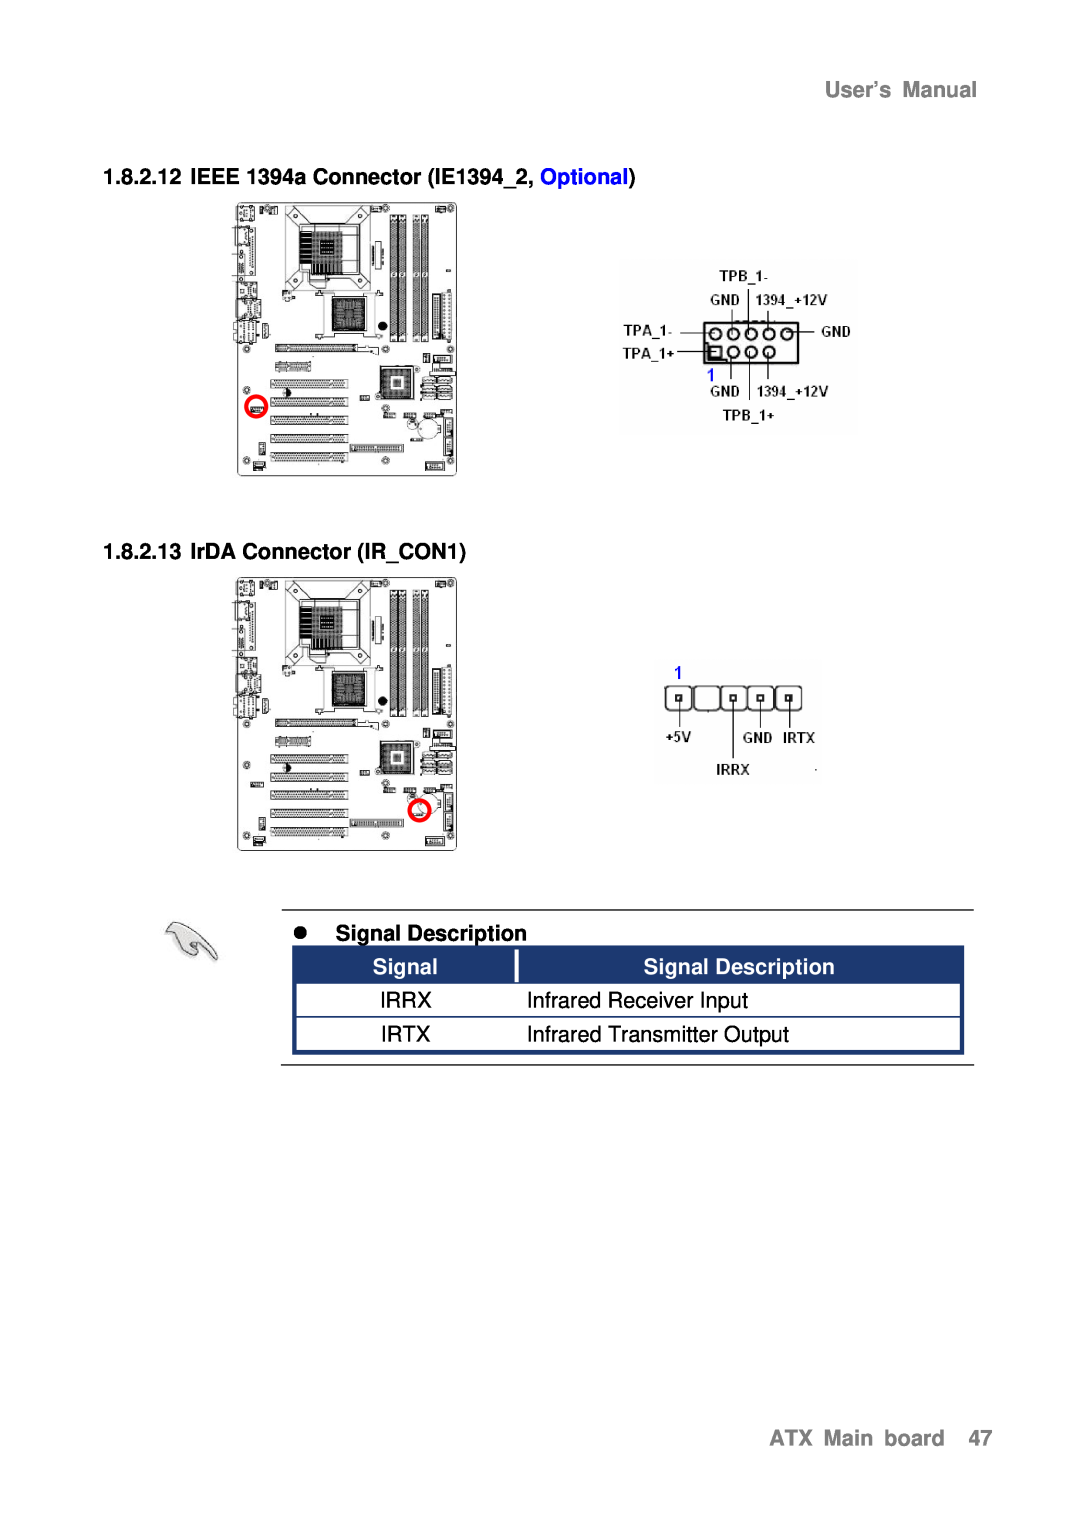 Intel AX965Q user manual IEEE 1394a Connector IE13942, Optional, IrDA Connector IRCON1 z Signal Description, User’s Manual 